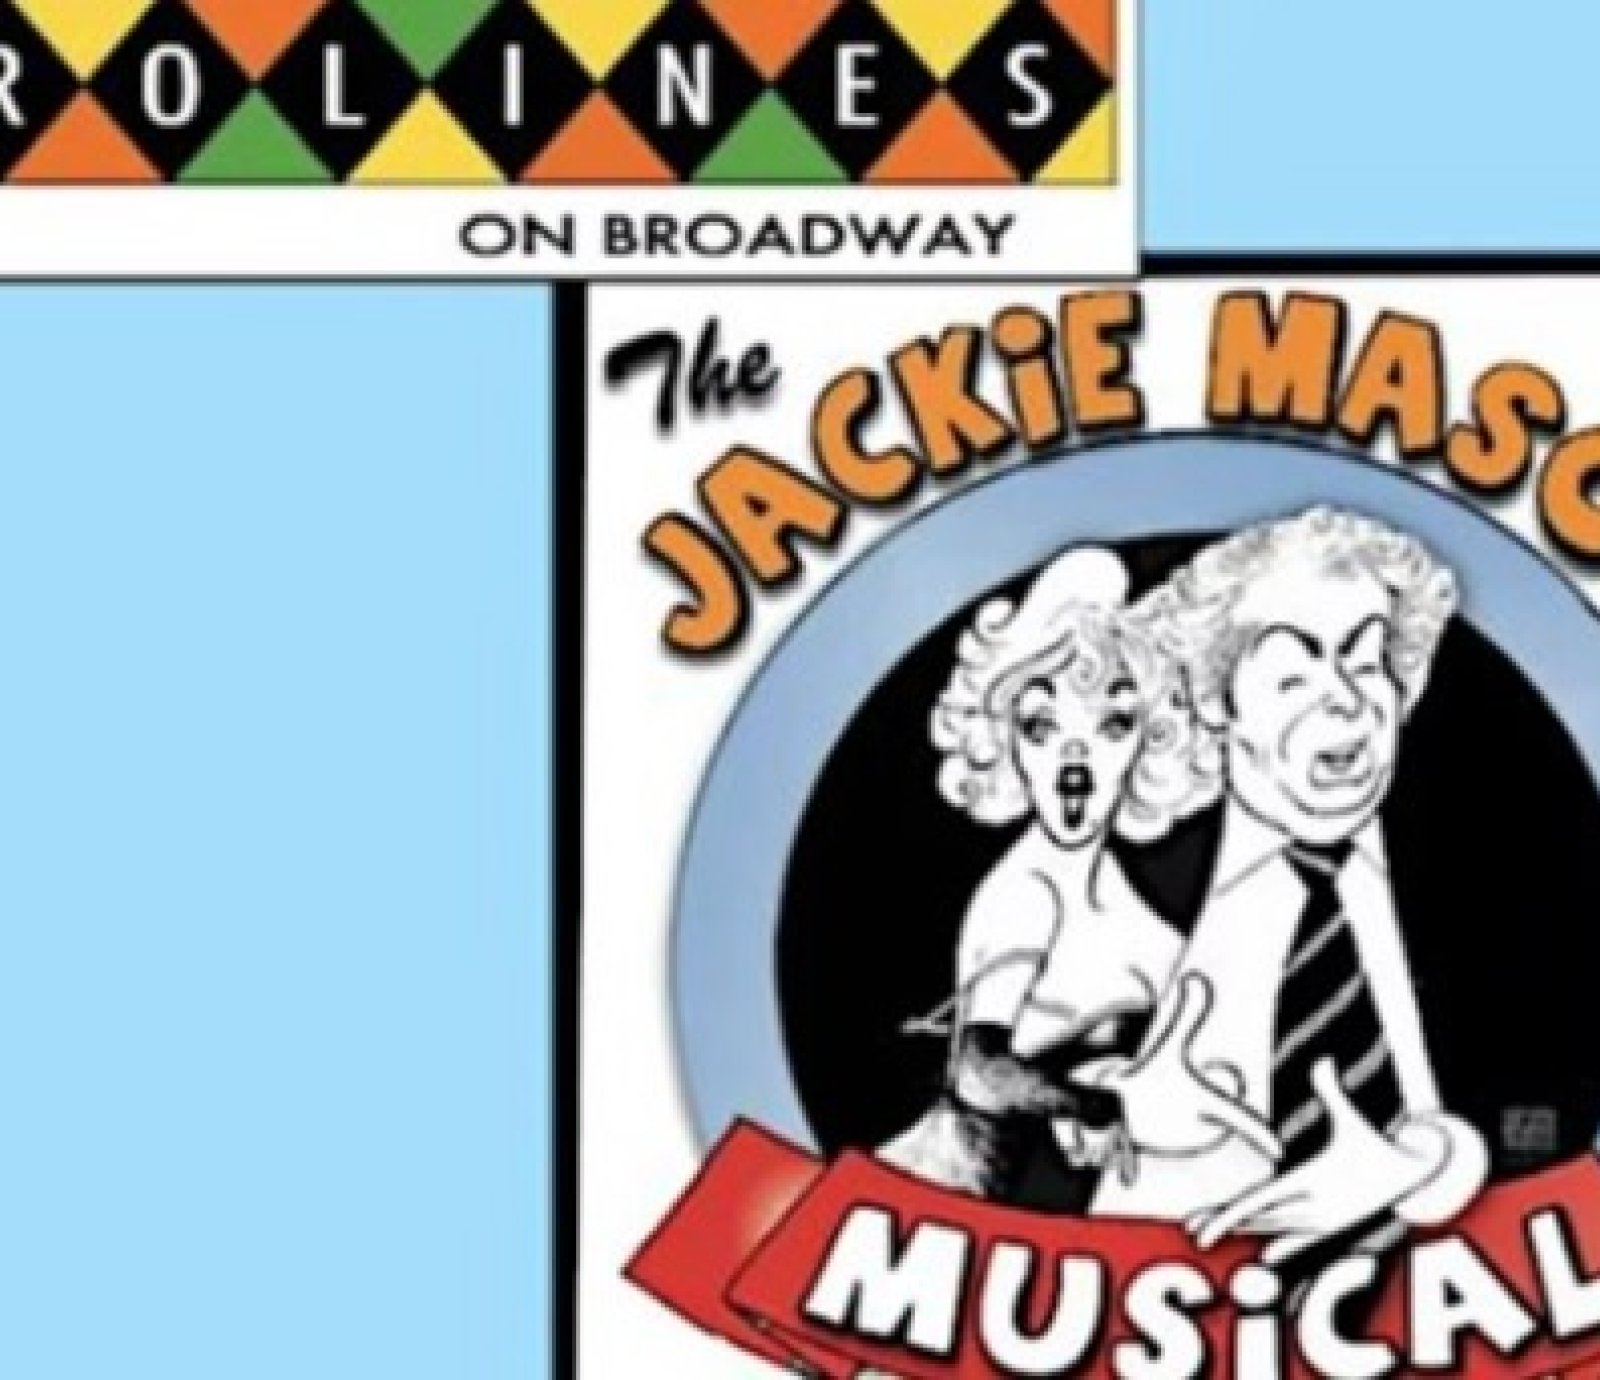 The Jackie Mason Musical